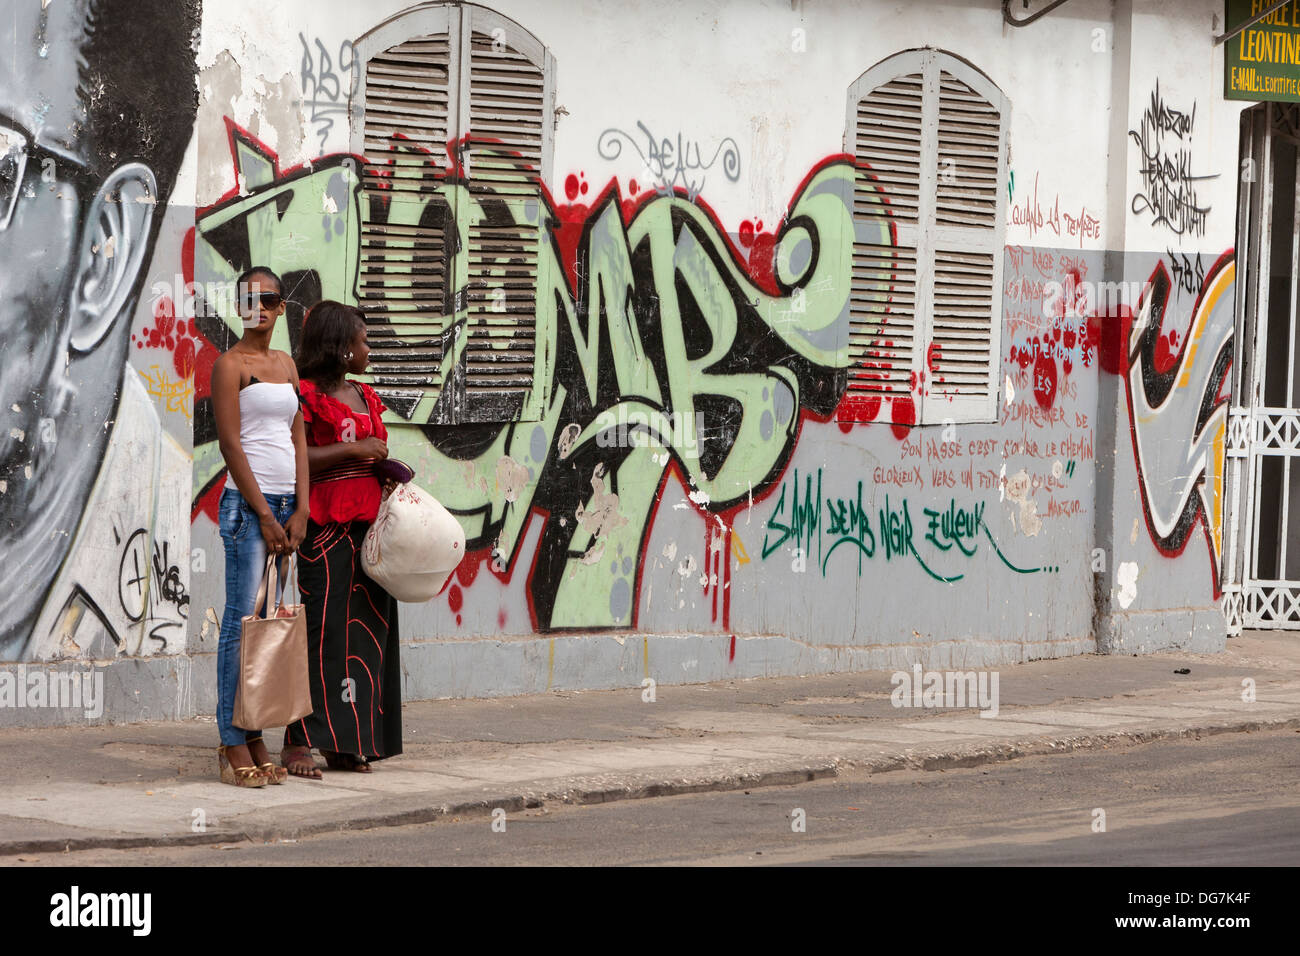 Senegal, Saint Louis. Two Stylish Senegalese Women Waiting for Local Transport. Stock Photo